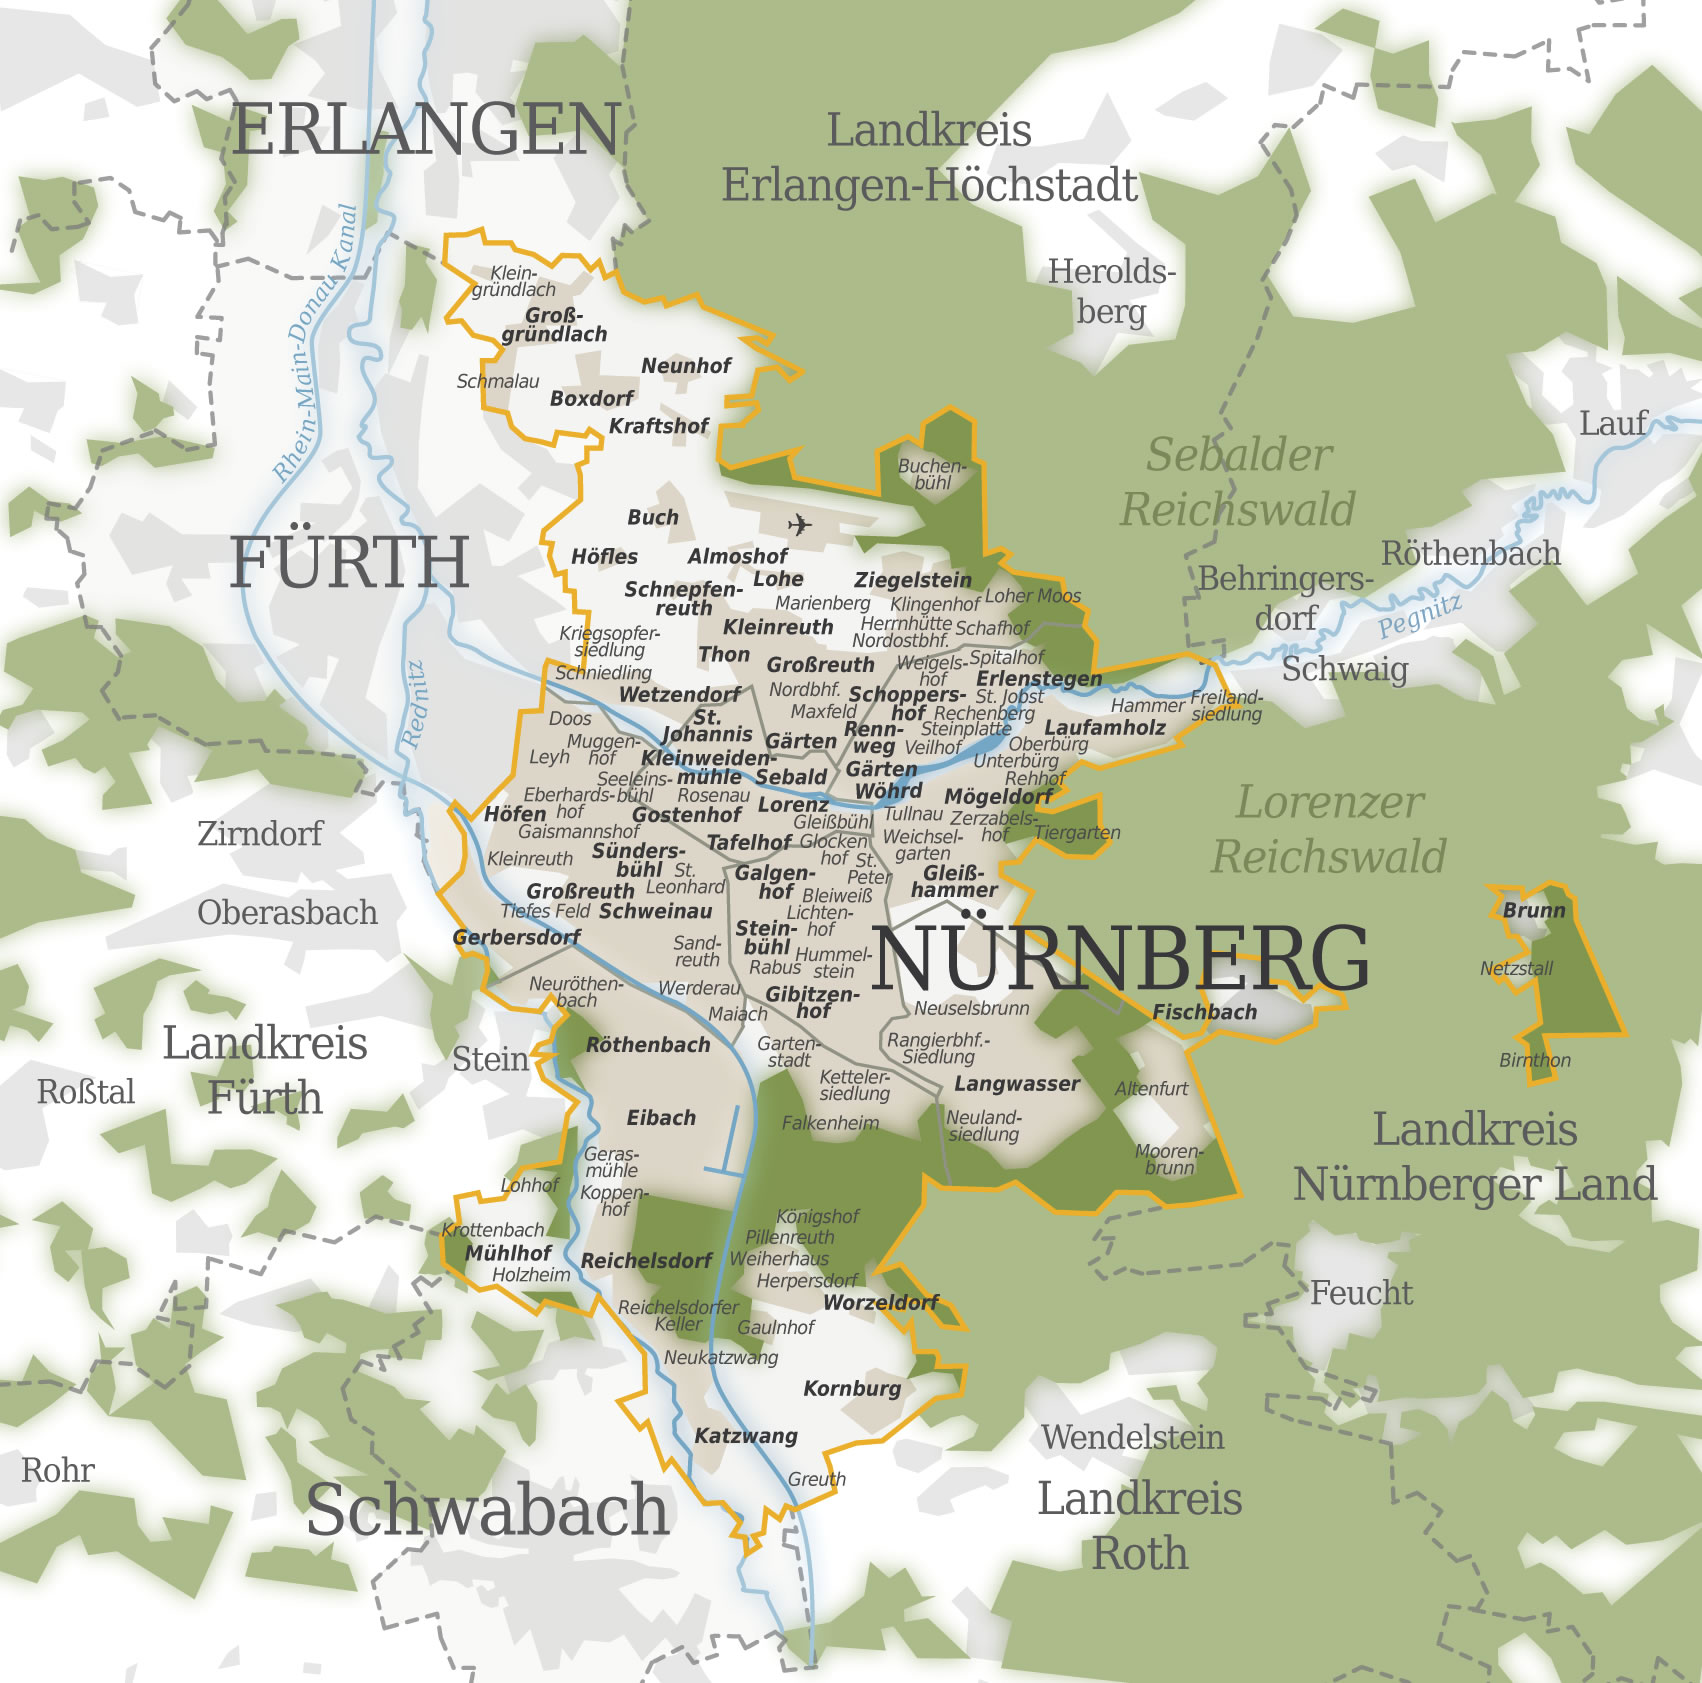 Nuremberg province plan